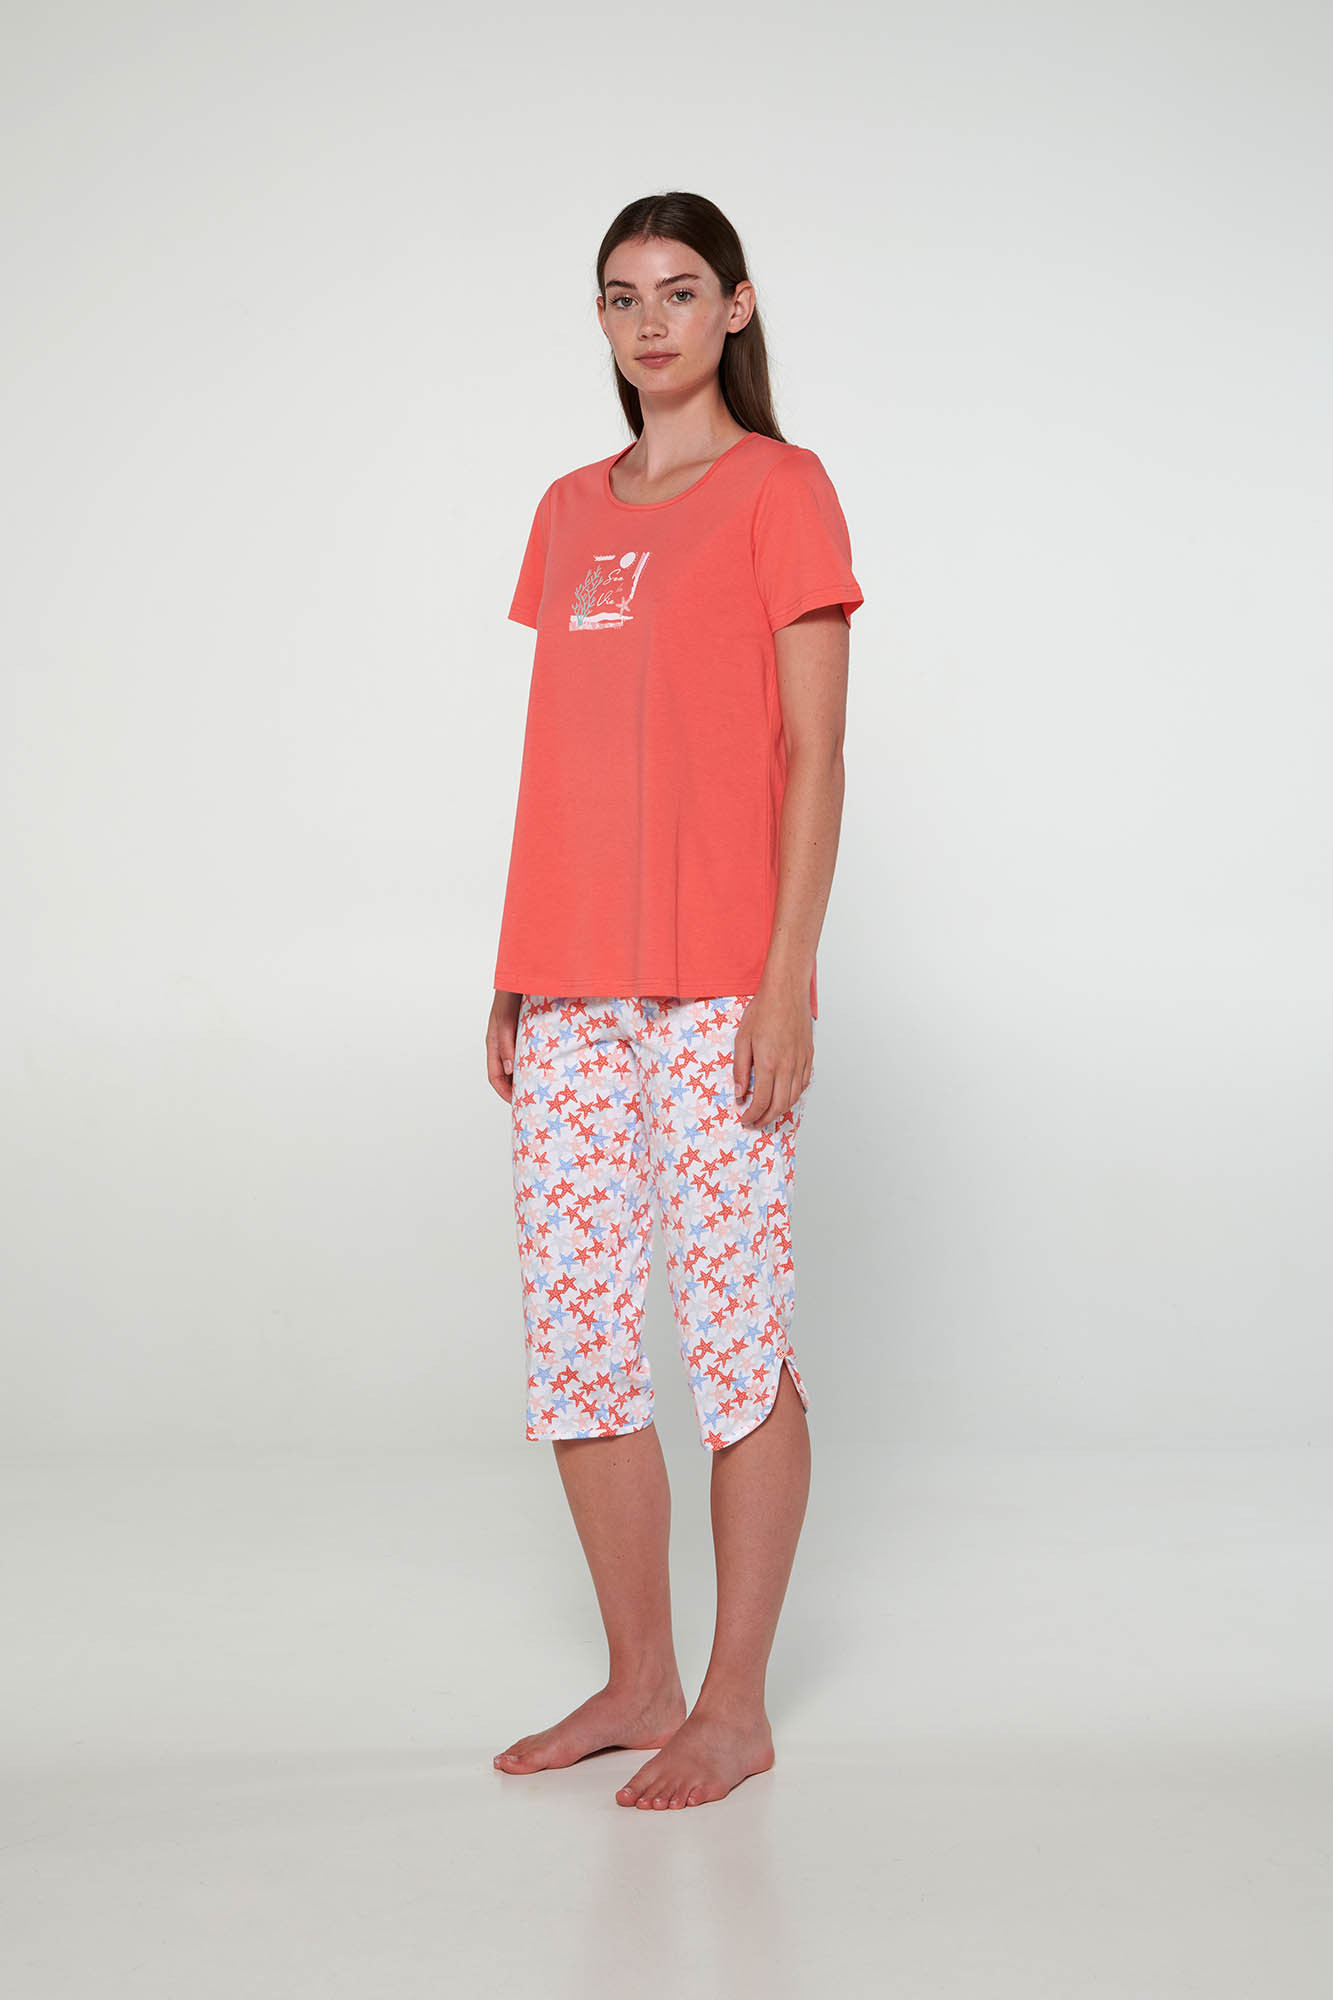 Vamp - Pyžamo s krátkými rukávy 20280 - Vamp coral berry XL